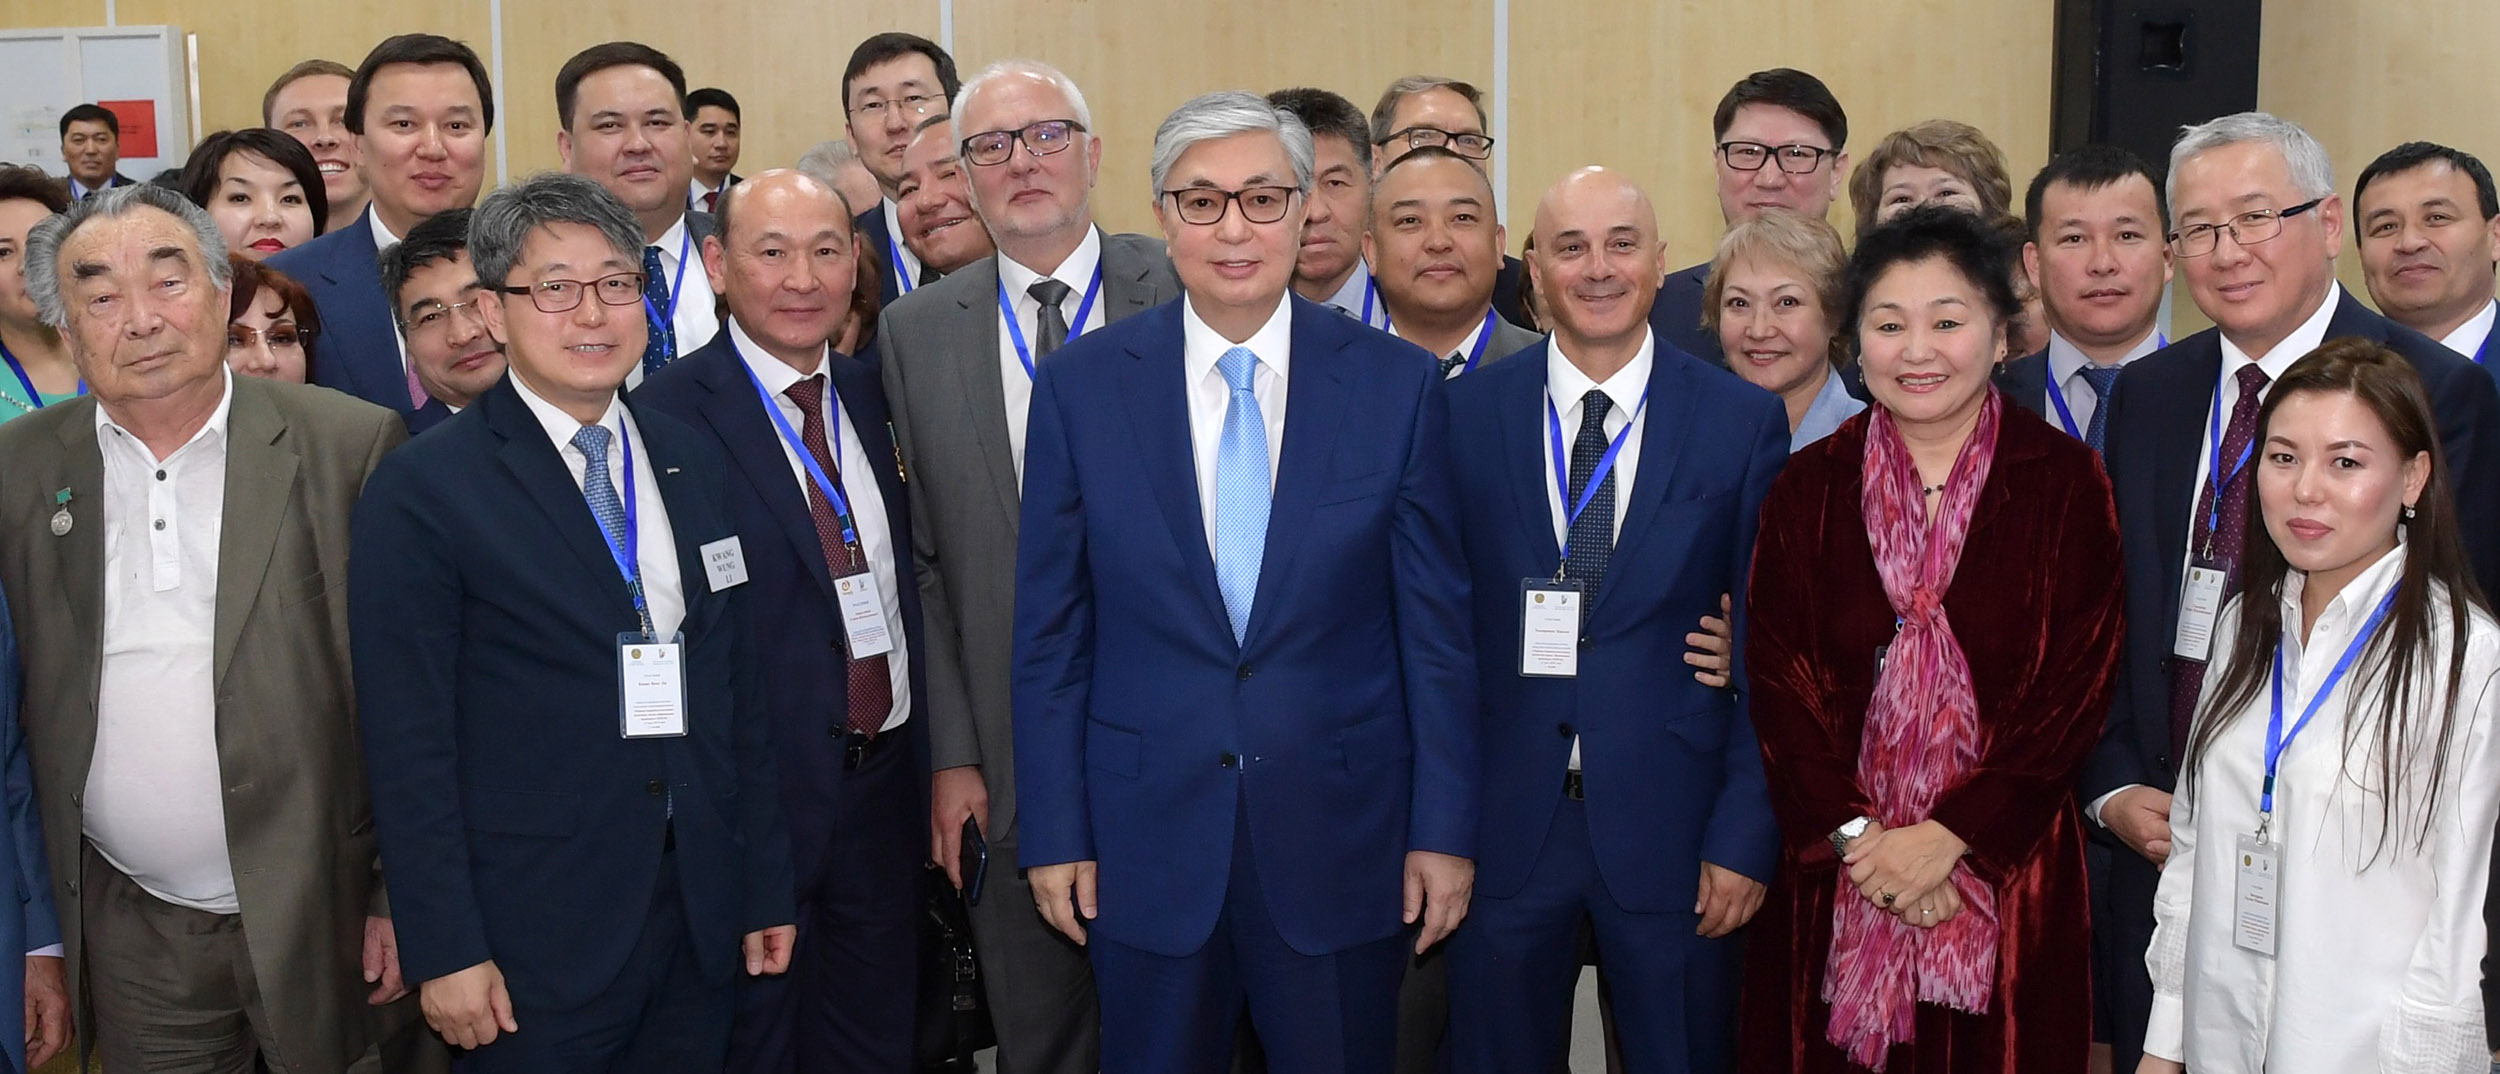 Президент Казахстана принял участие в форуме медицинских работников